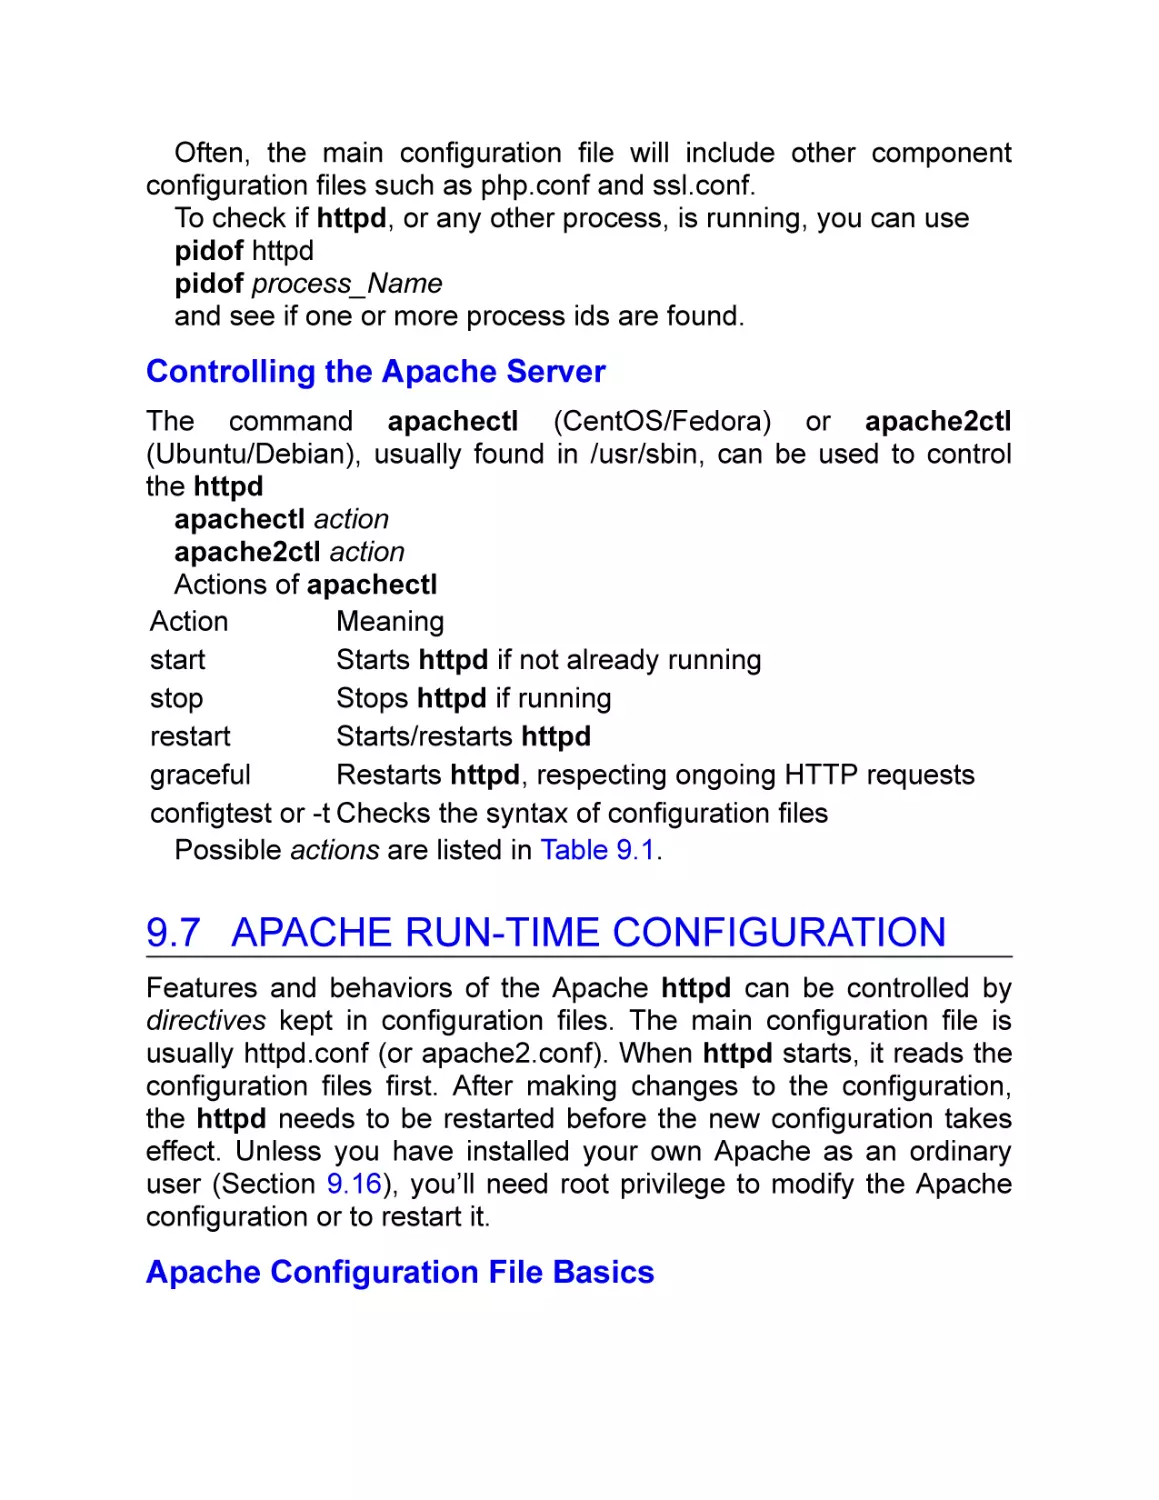 Controlling the Apache Server
9.7 Apache Run-Time Configuration
Apache Configuration File Basics